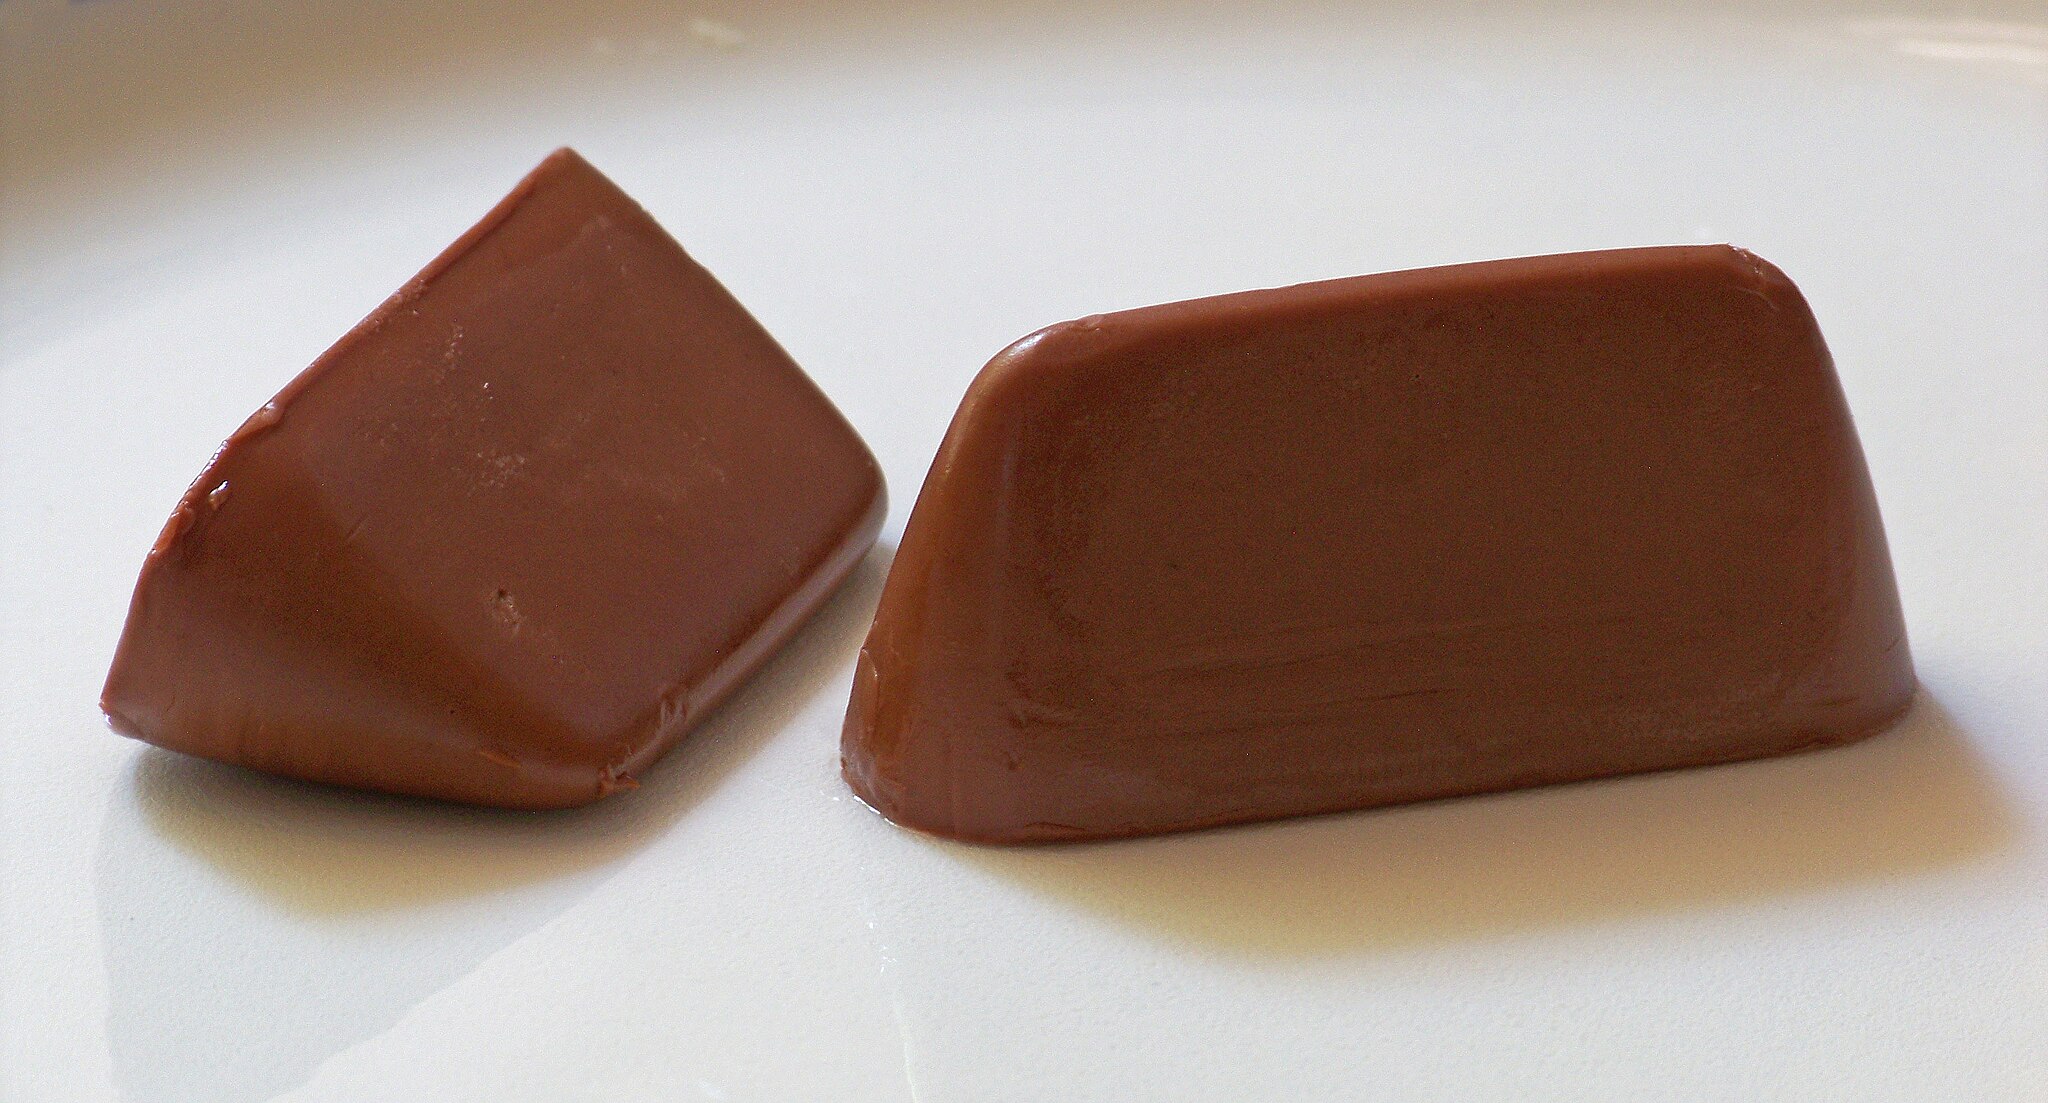 Italian chocolate pralines shaped like an upturned boat